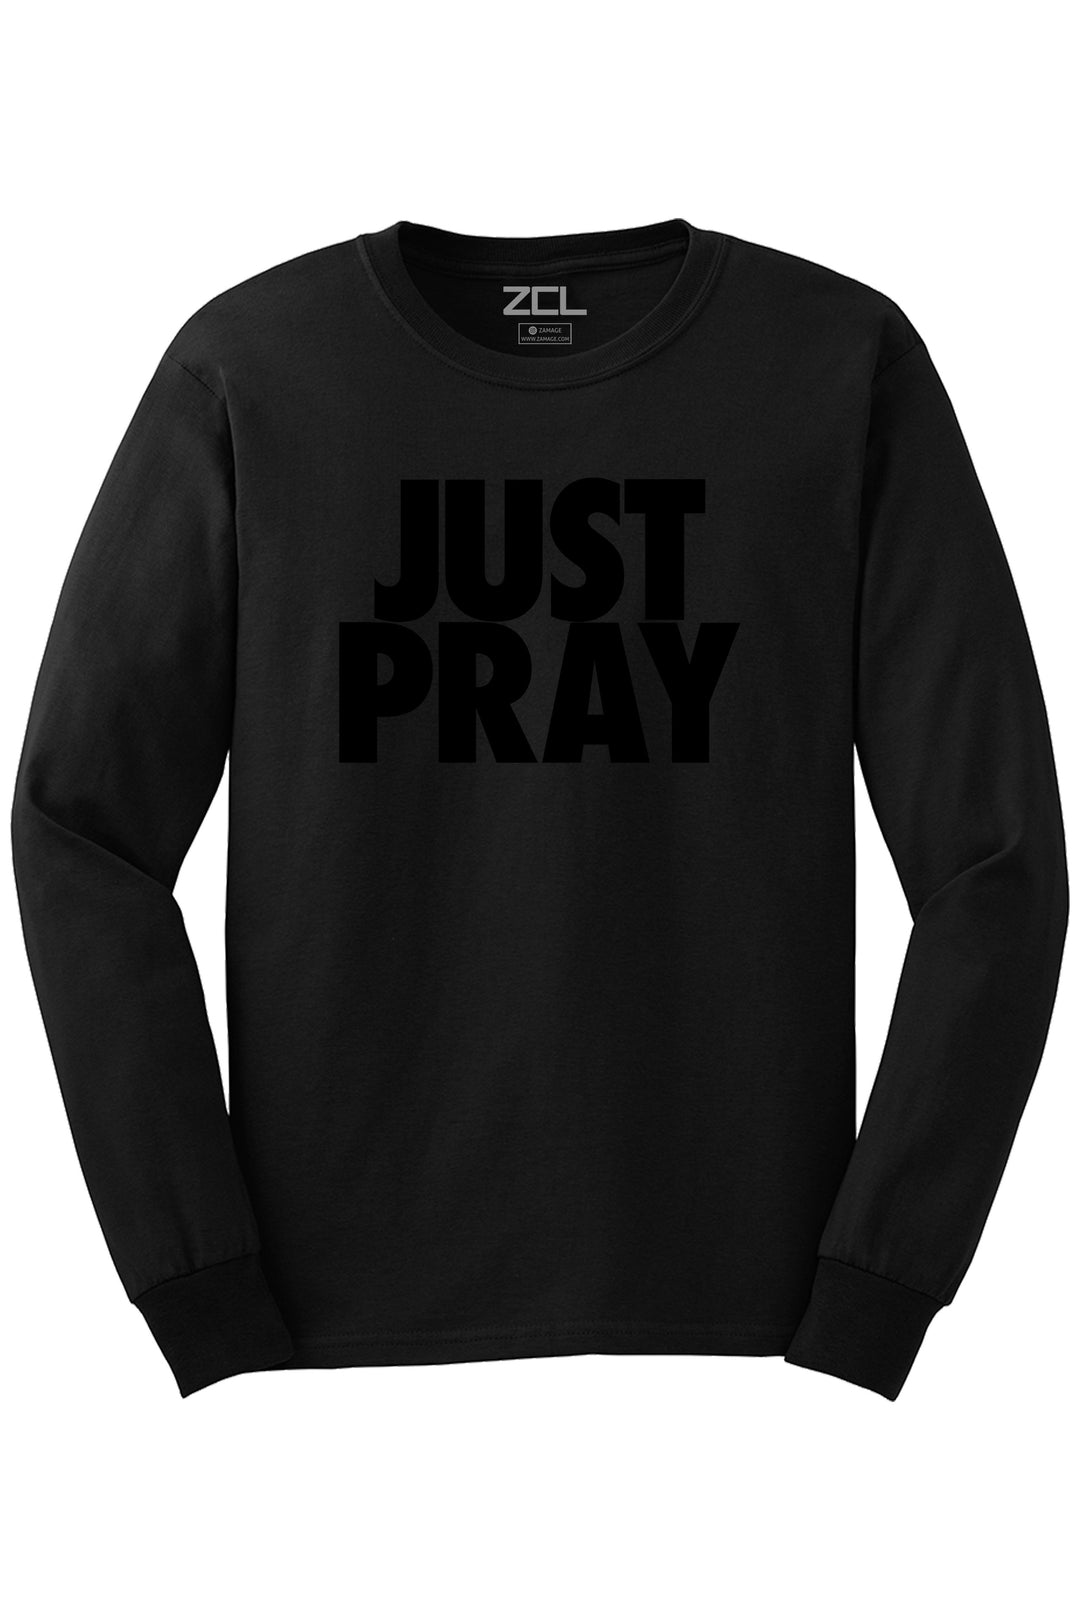 Just Pray Long Sleeve Tee (Black Logo) - Zamage